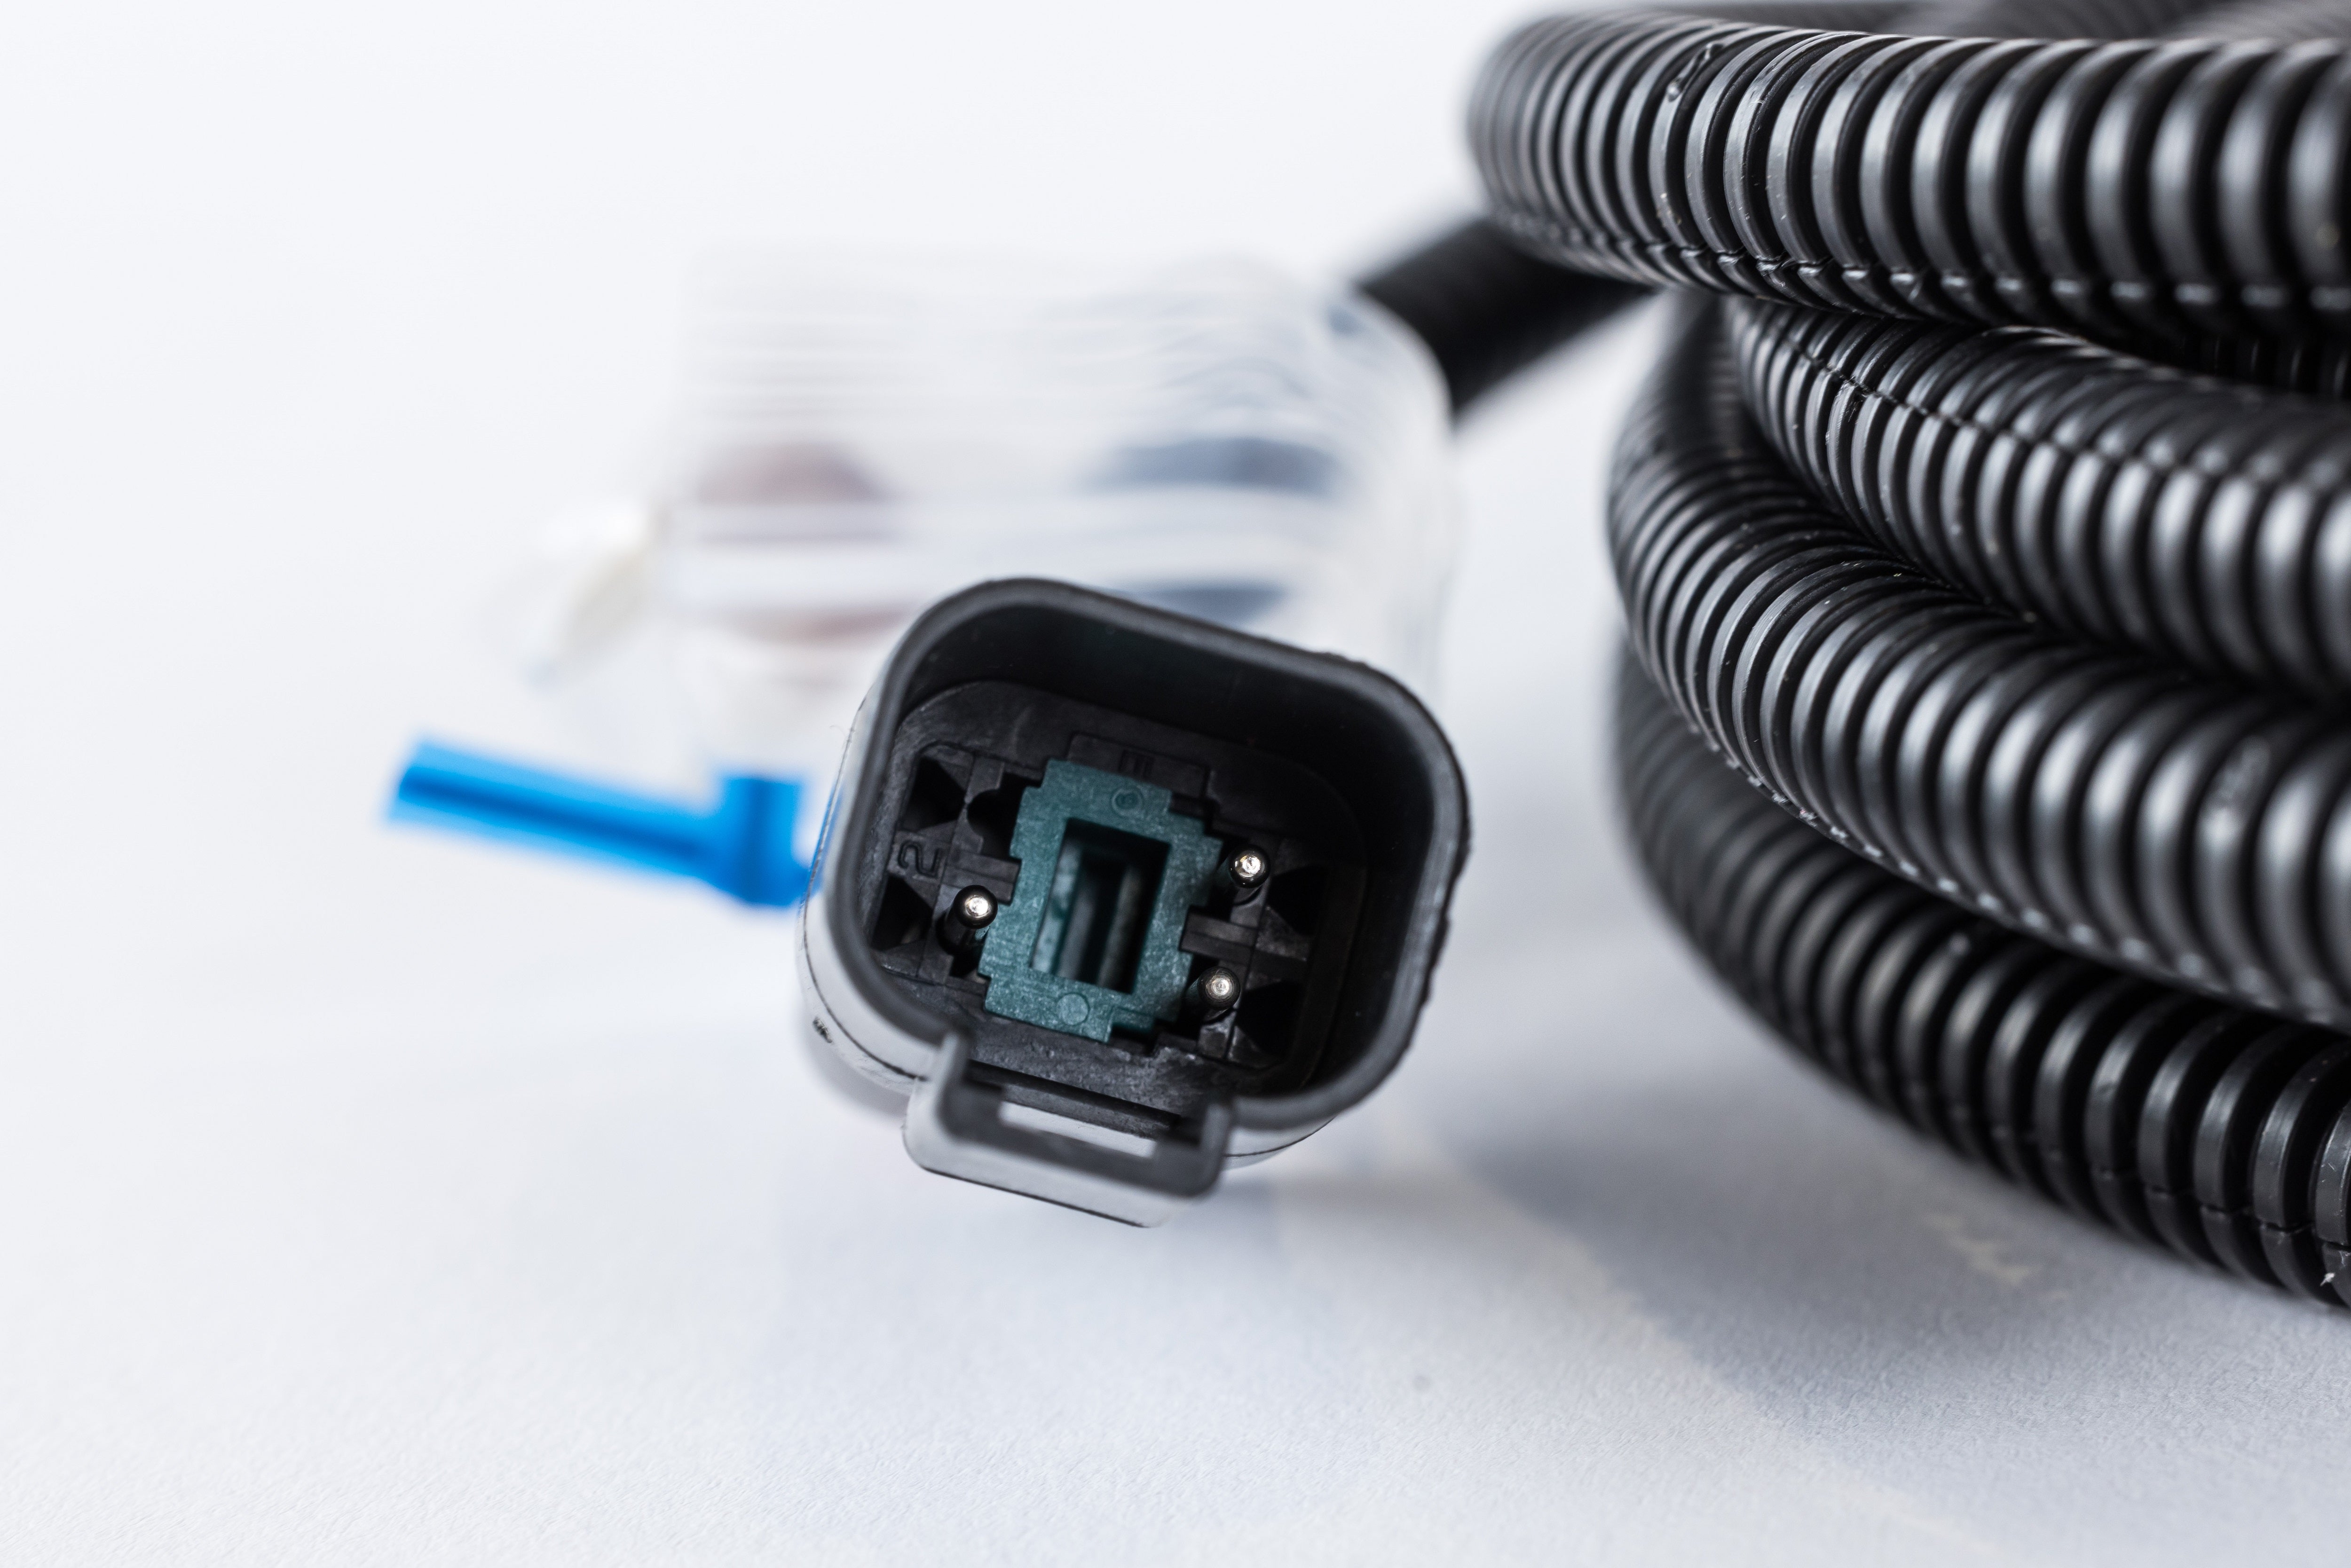 Webasto Wiring Harness Adapter For Smartemp 3.0 Ttevo Tp50 5013932A Heater Part